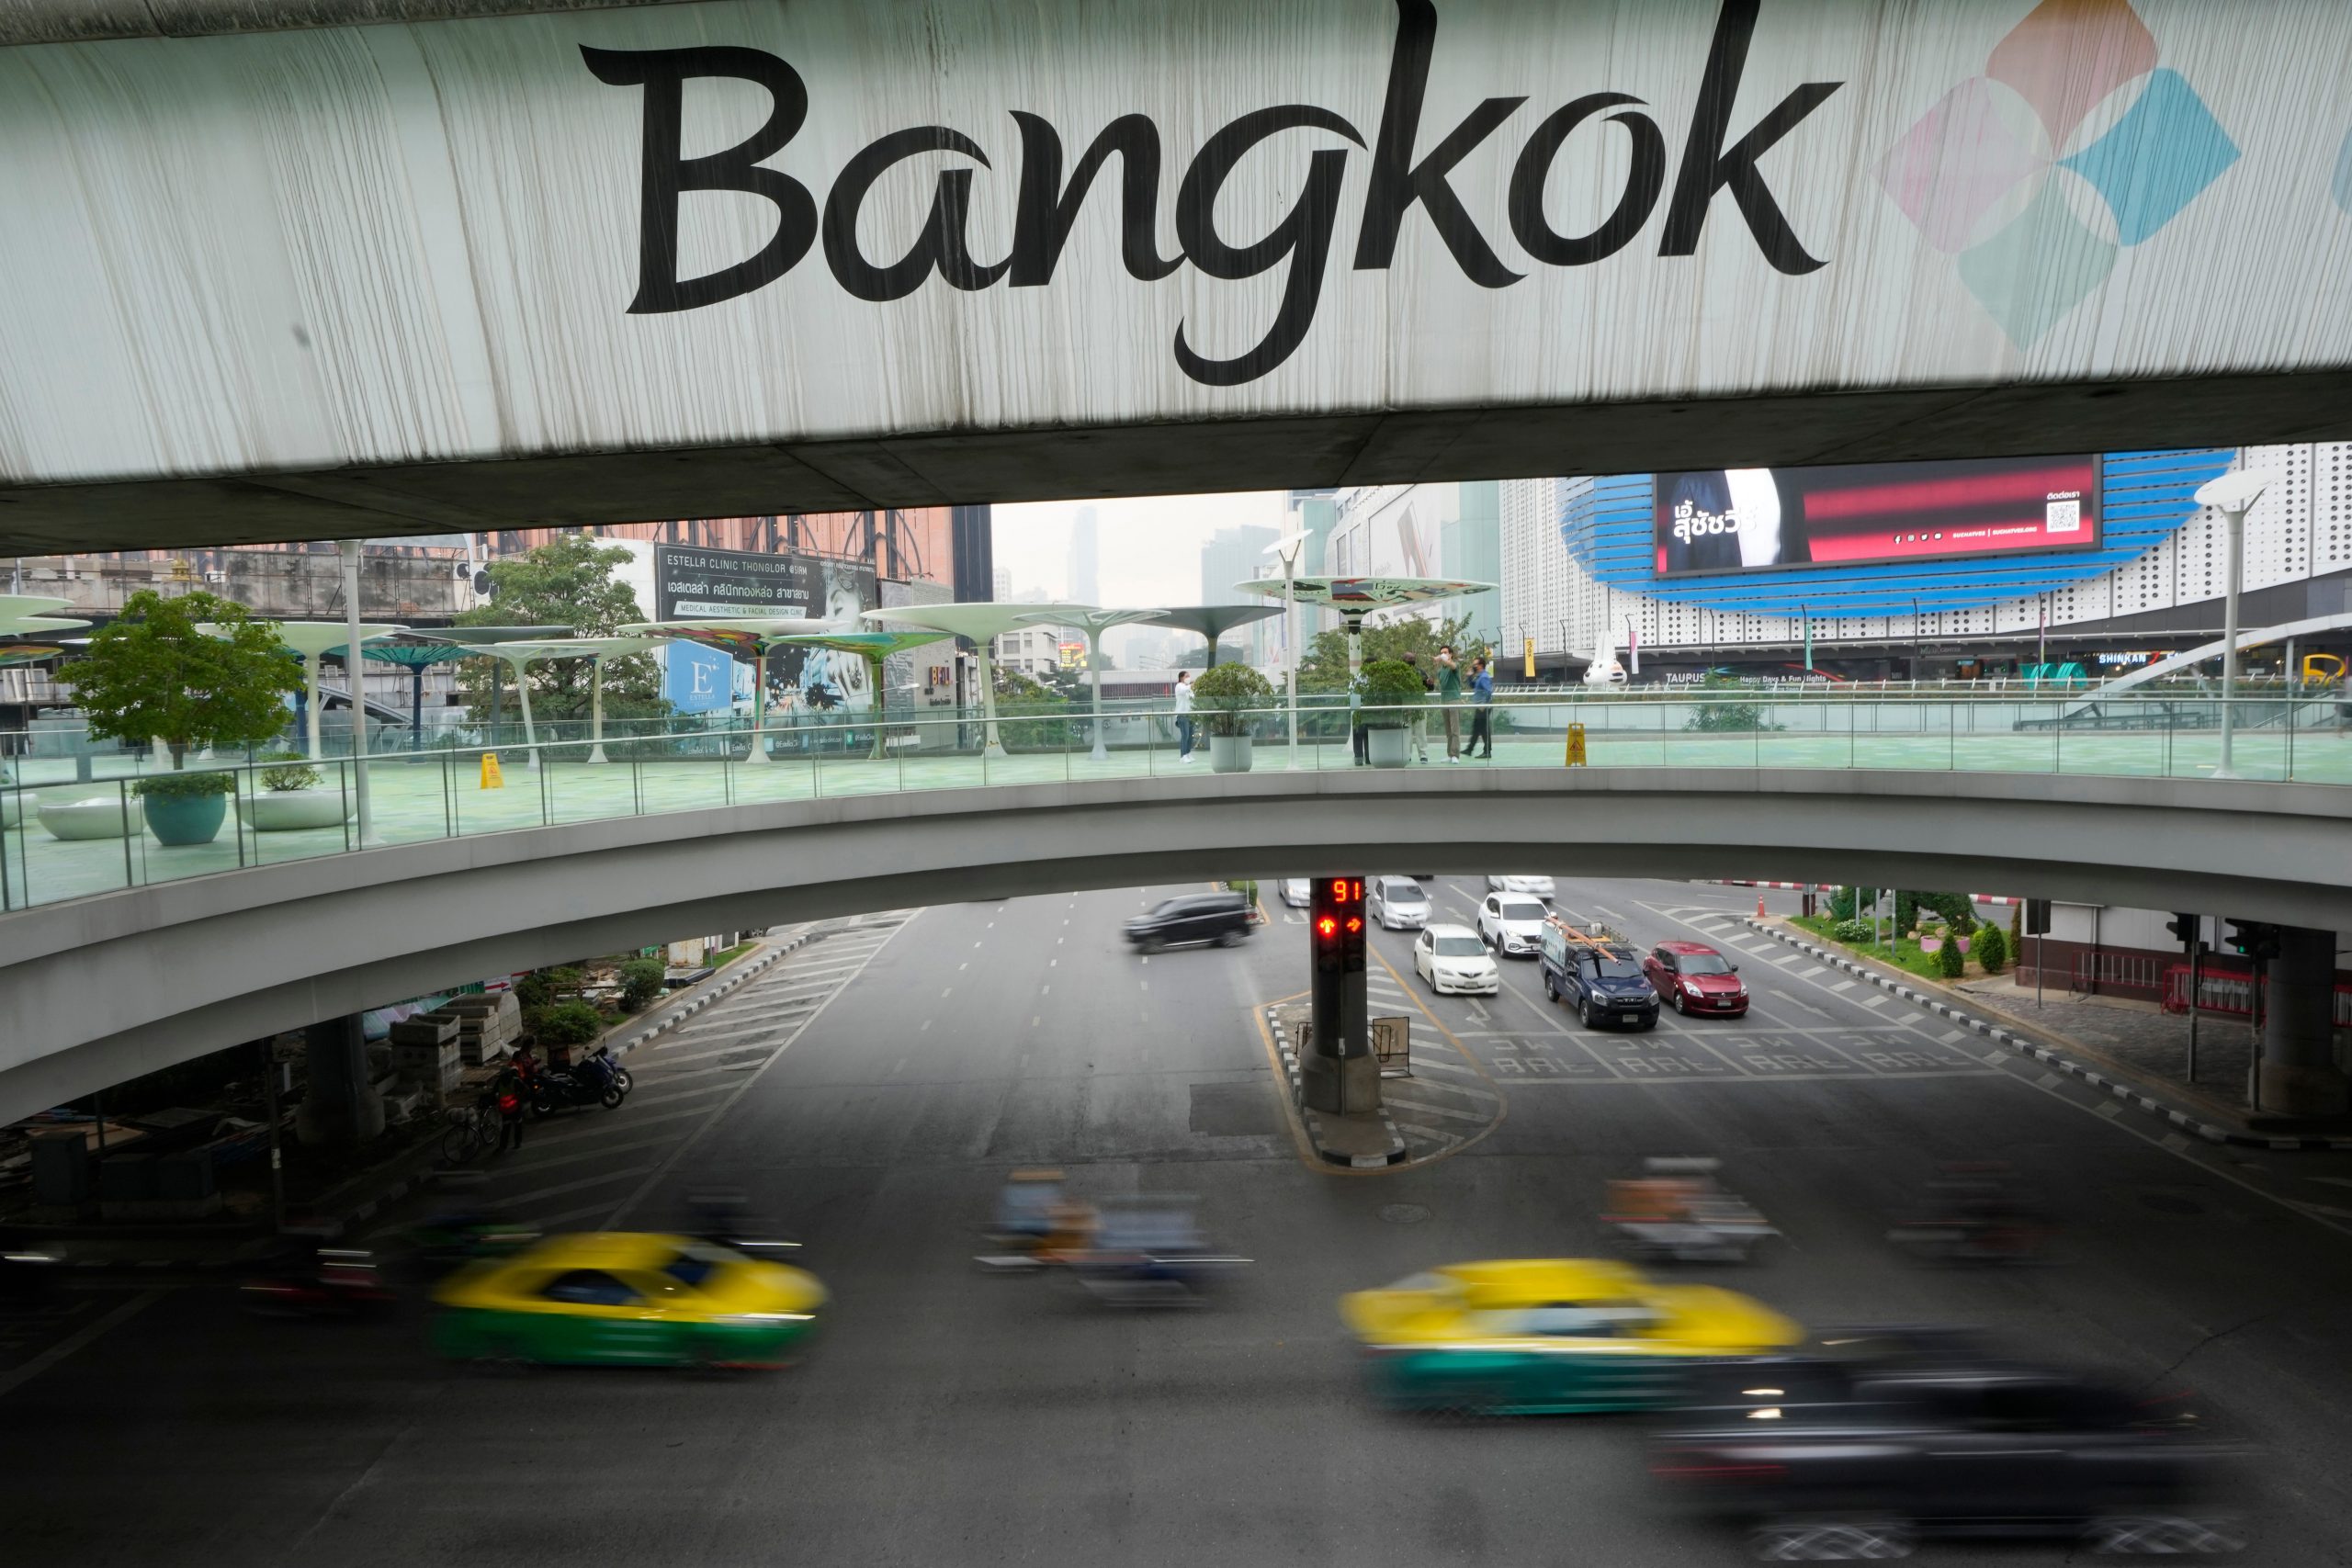 Thailand quells talk of name change, says it’s still Bangkok